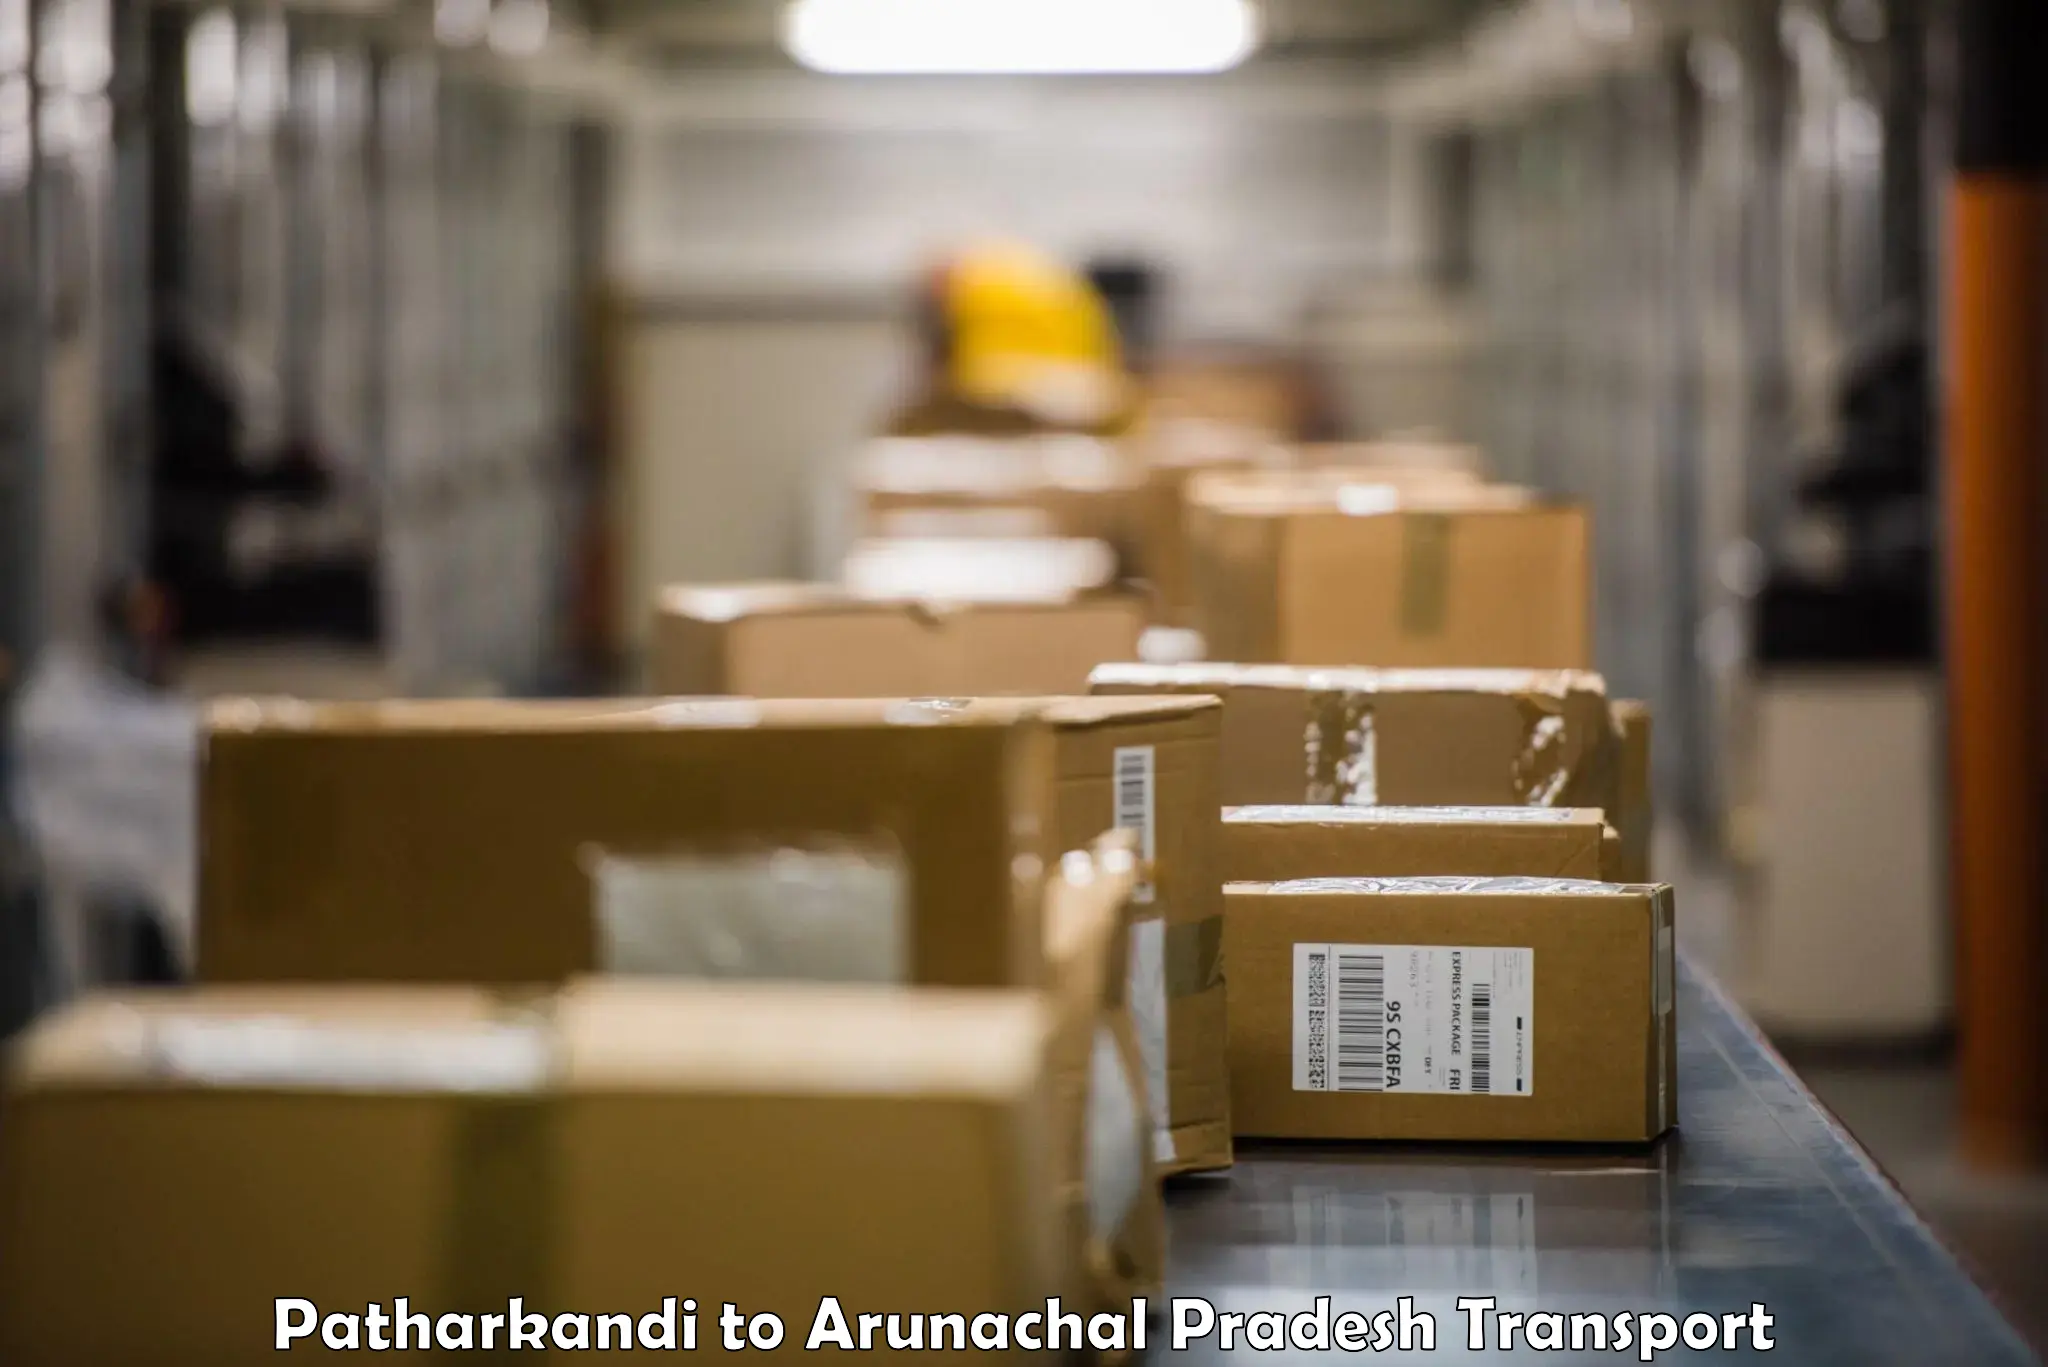 Truck transport companies in India in Patharkandi to Kurung Kumey